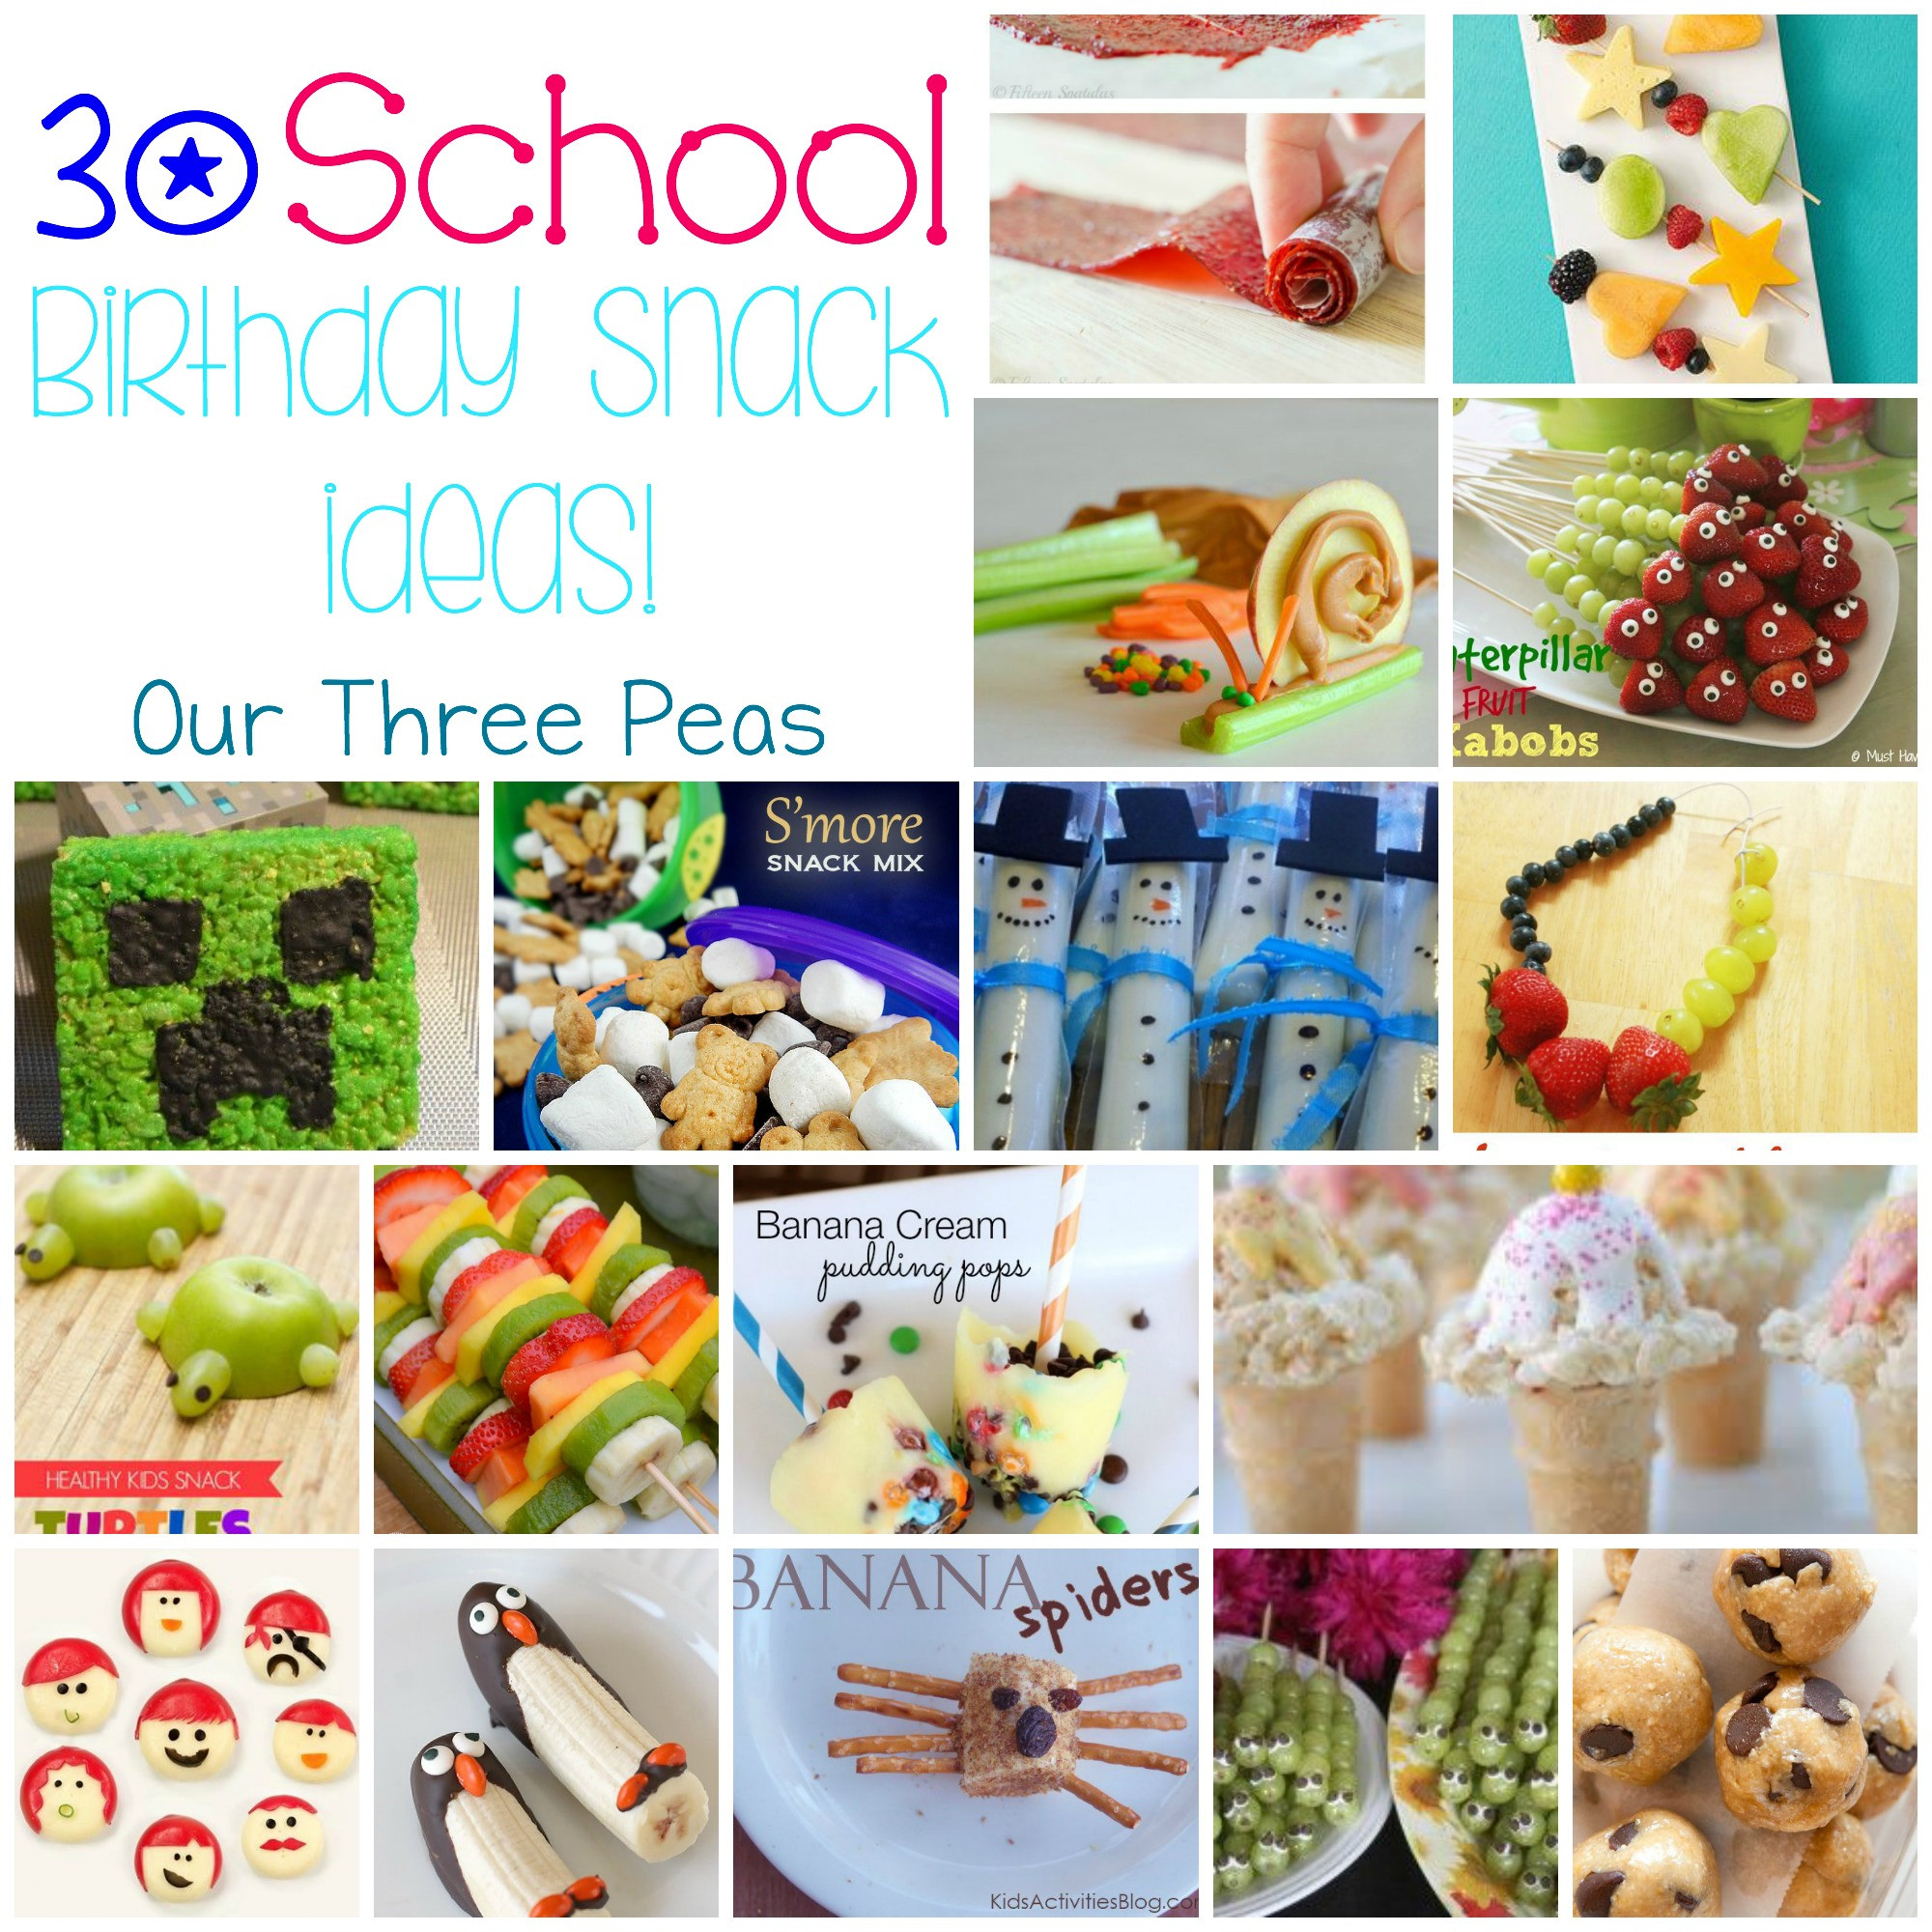 Healthy Birthday Snacks For School
 30 School Birthday Snack Ideas round up Our Three Peas